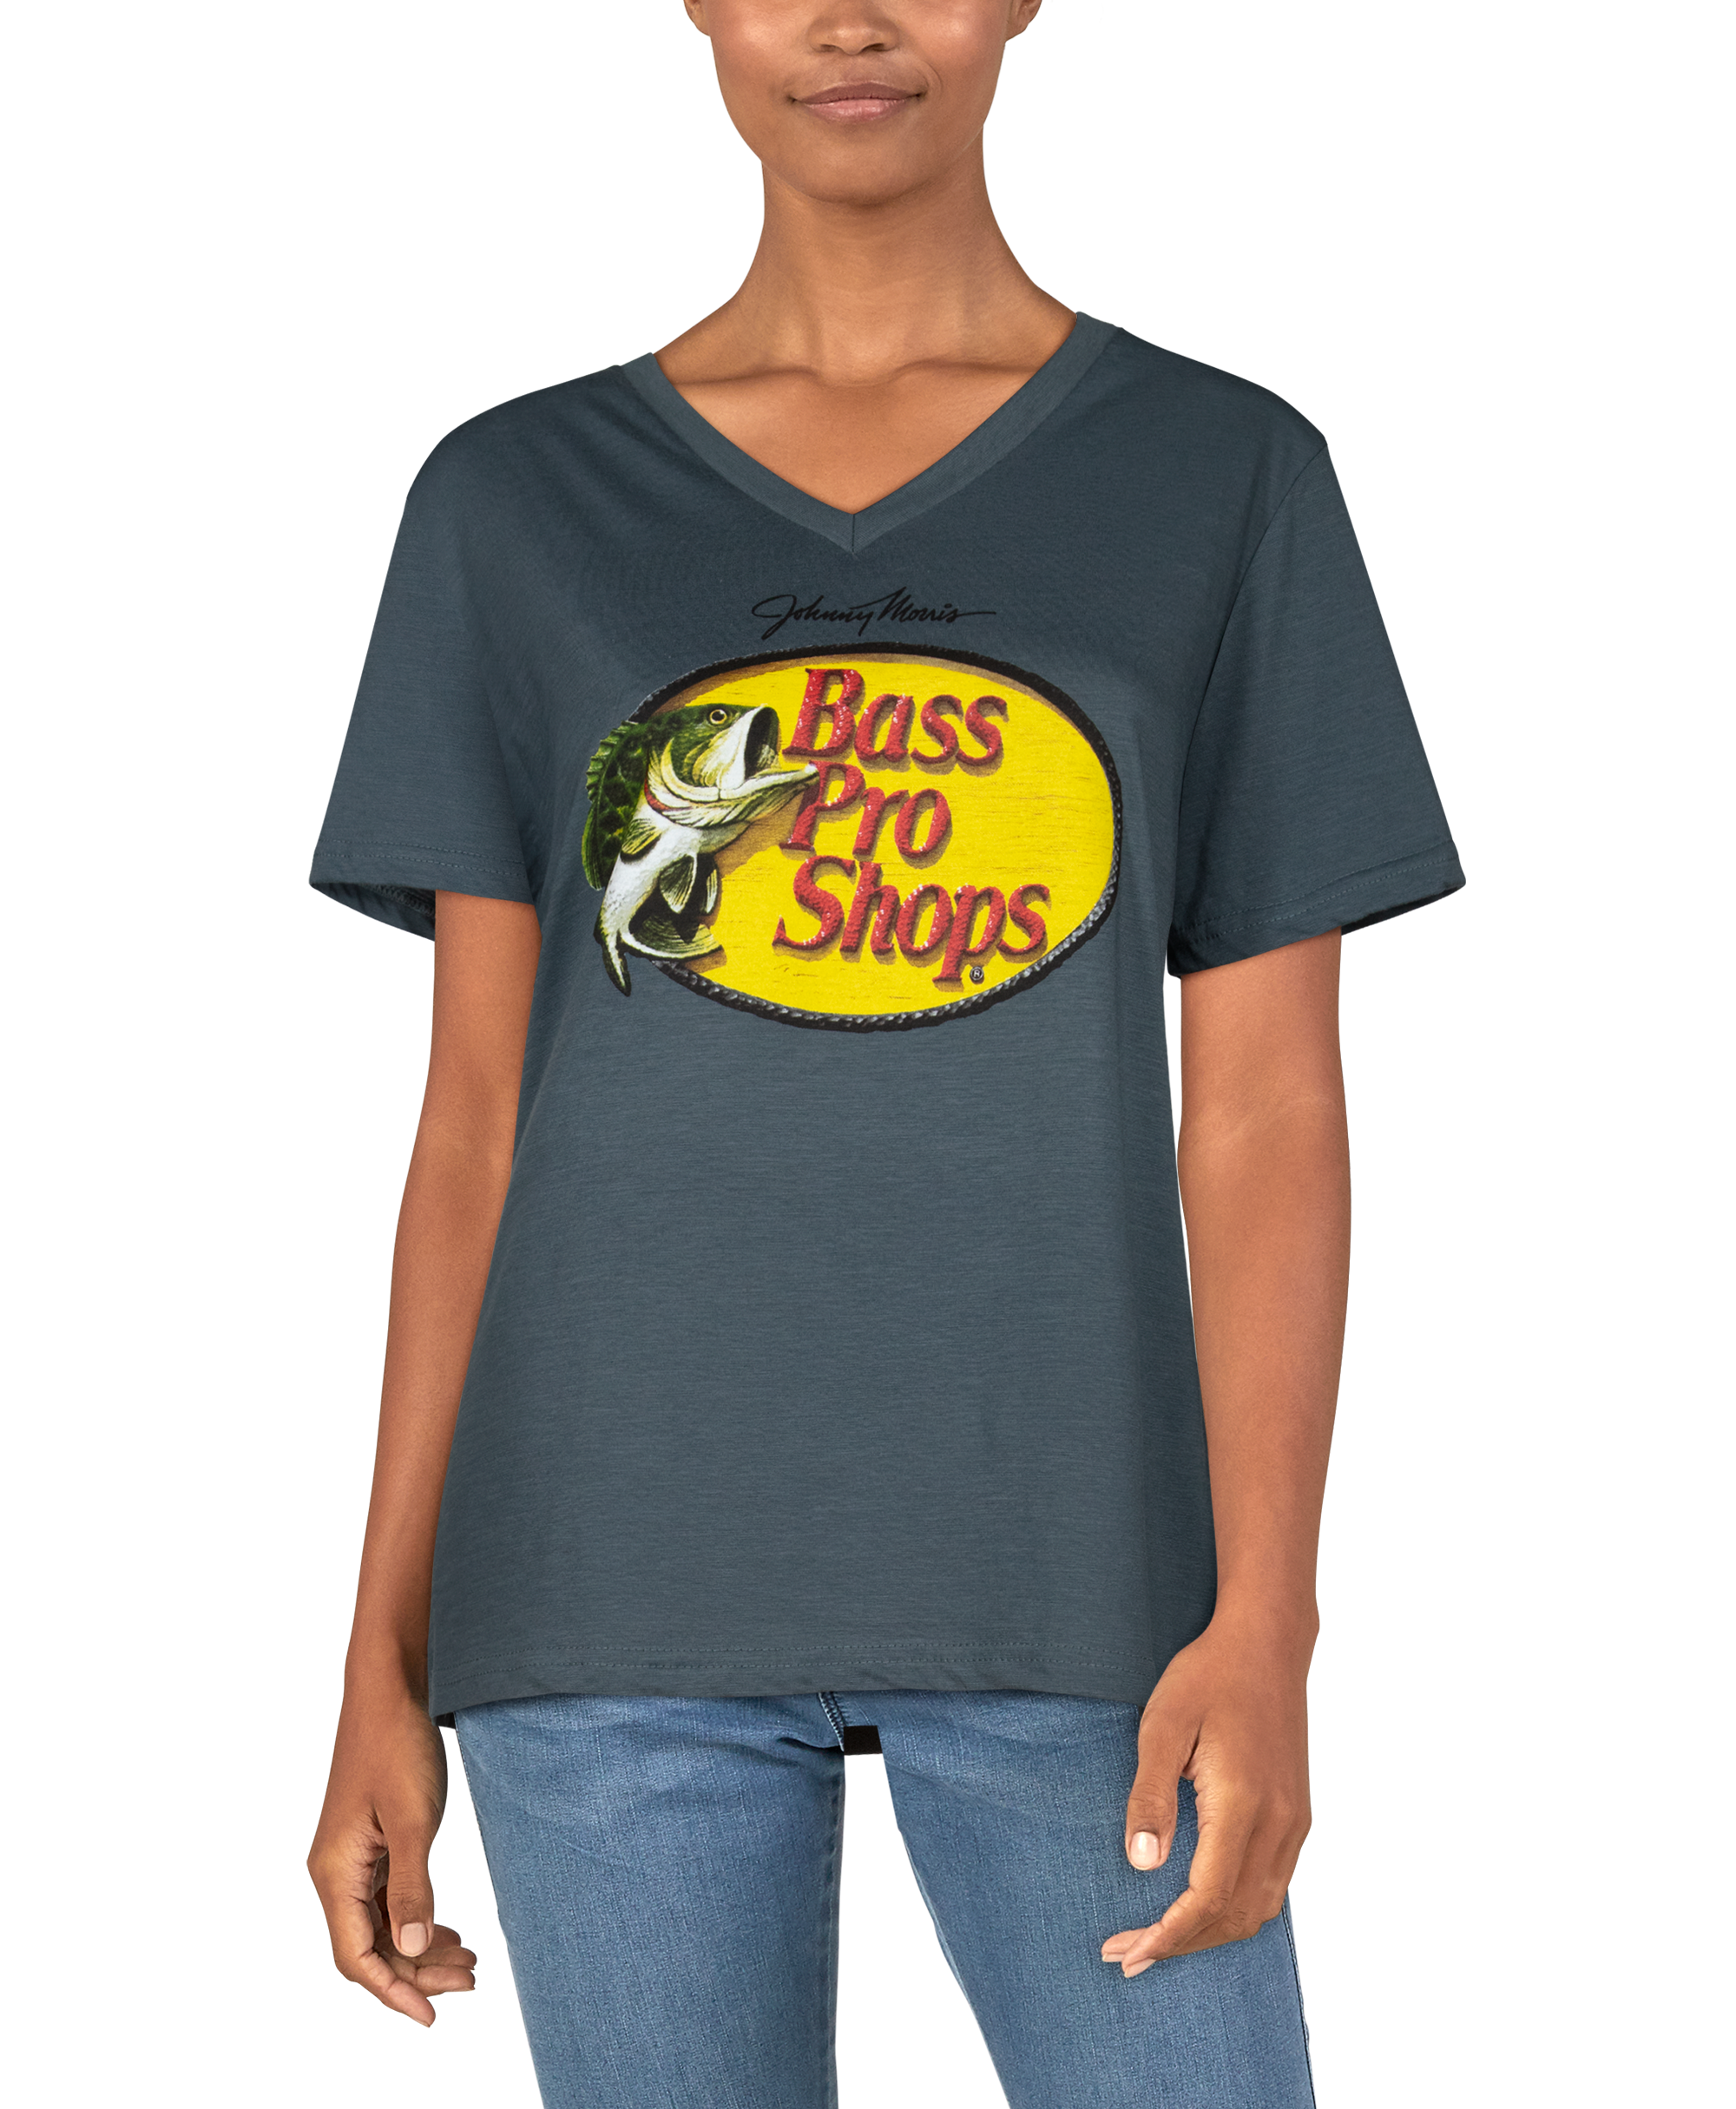 Bass Pro Shops Woodcut Logo V-Neck Short-Sleeve T-Shirt for Ladies - Charcoal - M